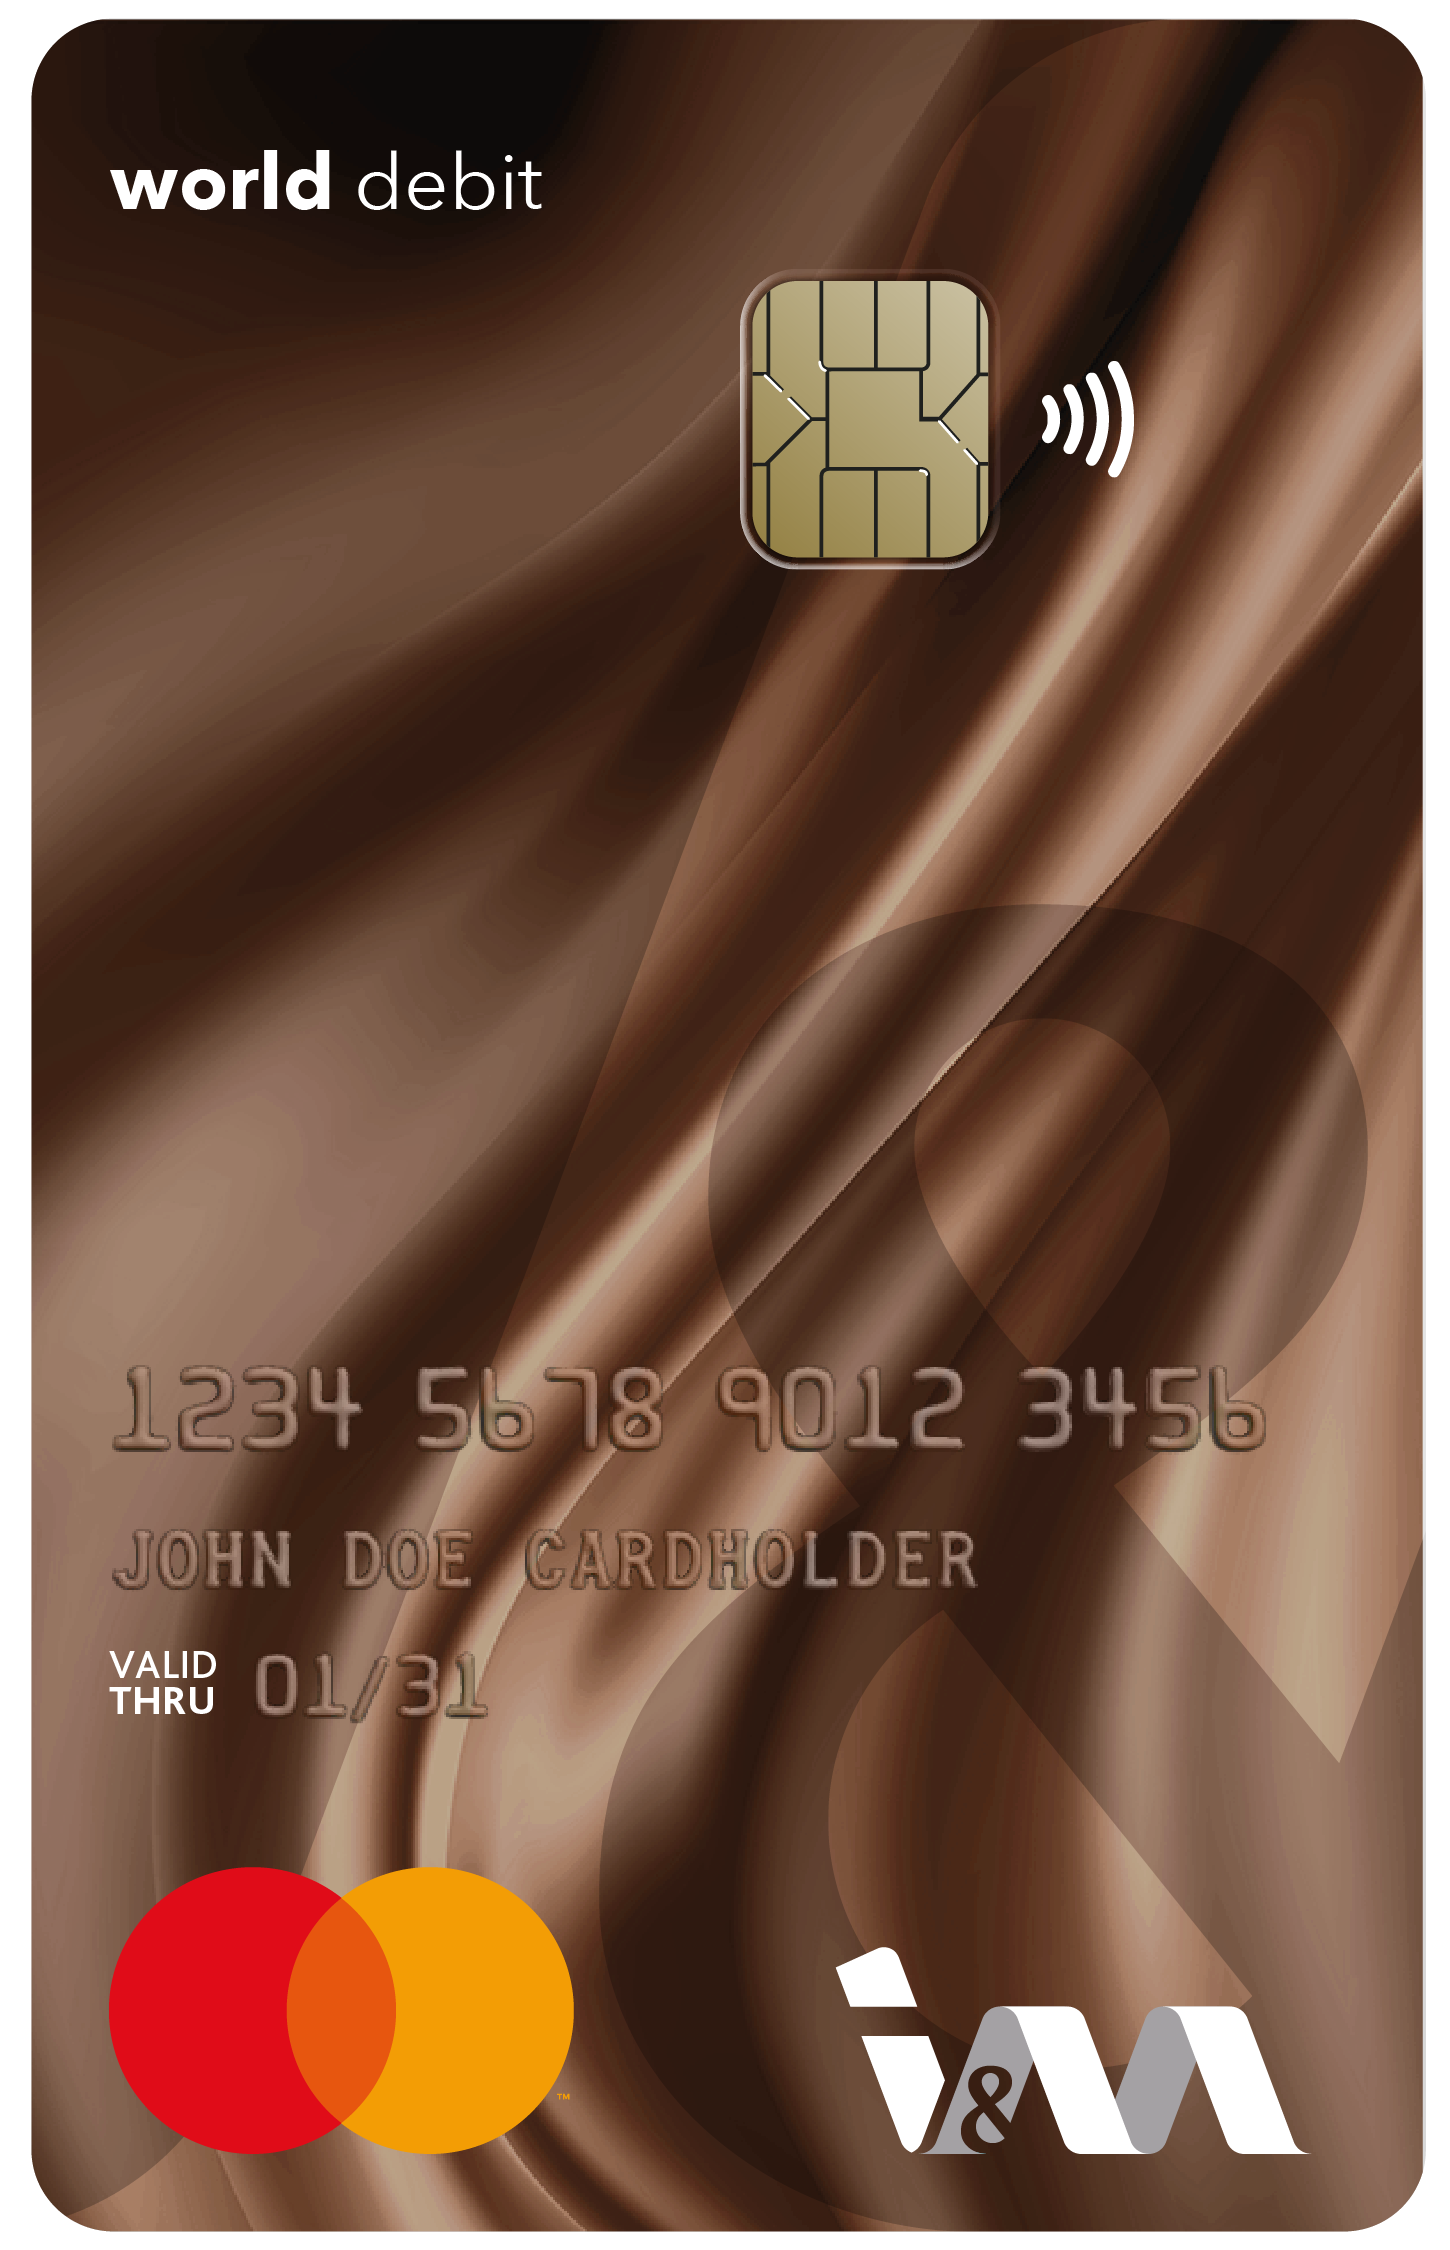 I&M Bank Uganda - I&M Bank World Debit Mastercard